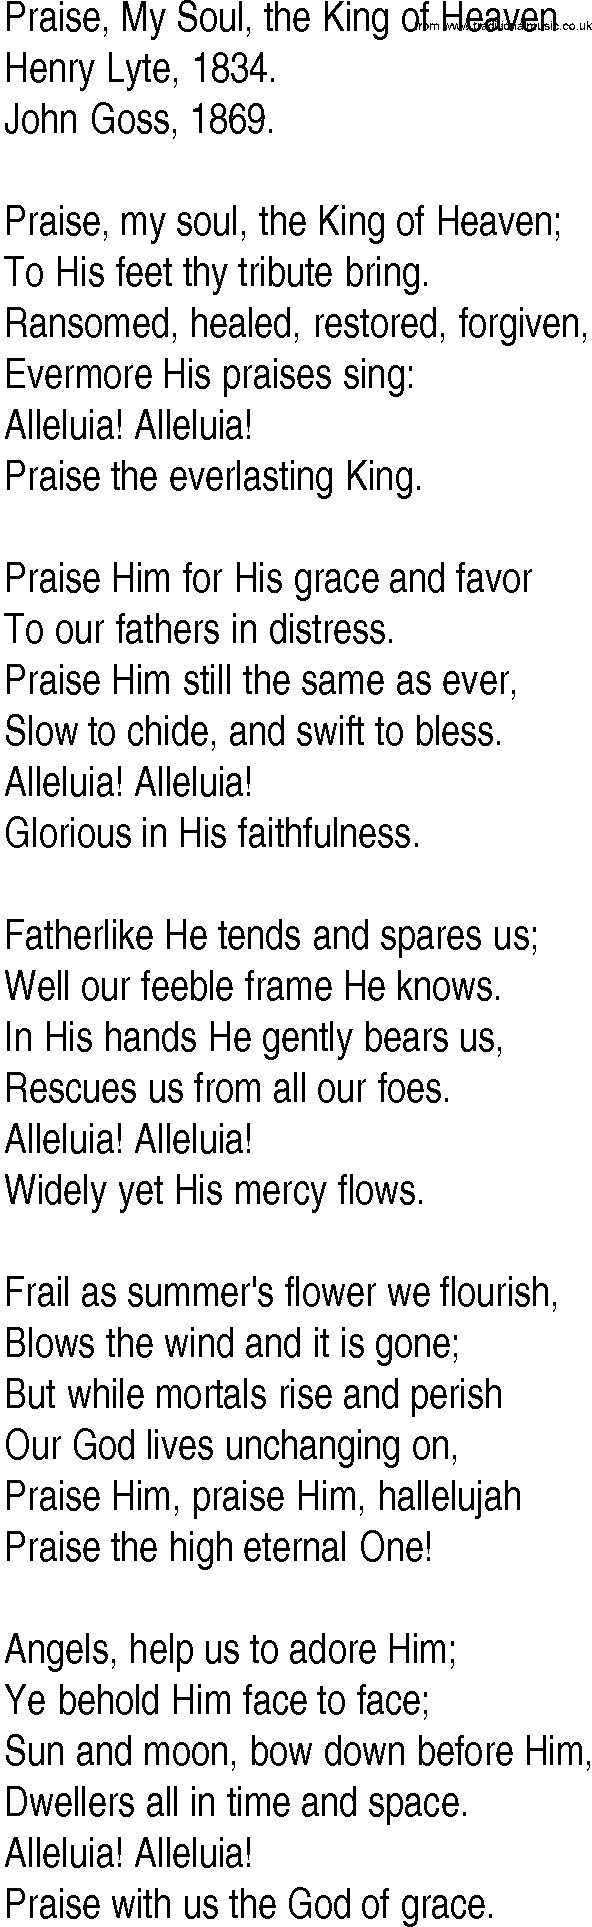 Hymn and Gospel Song: Praise, My Soul, the King of Heaven by Henry Lyte lyrics